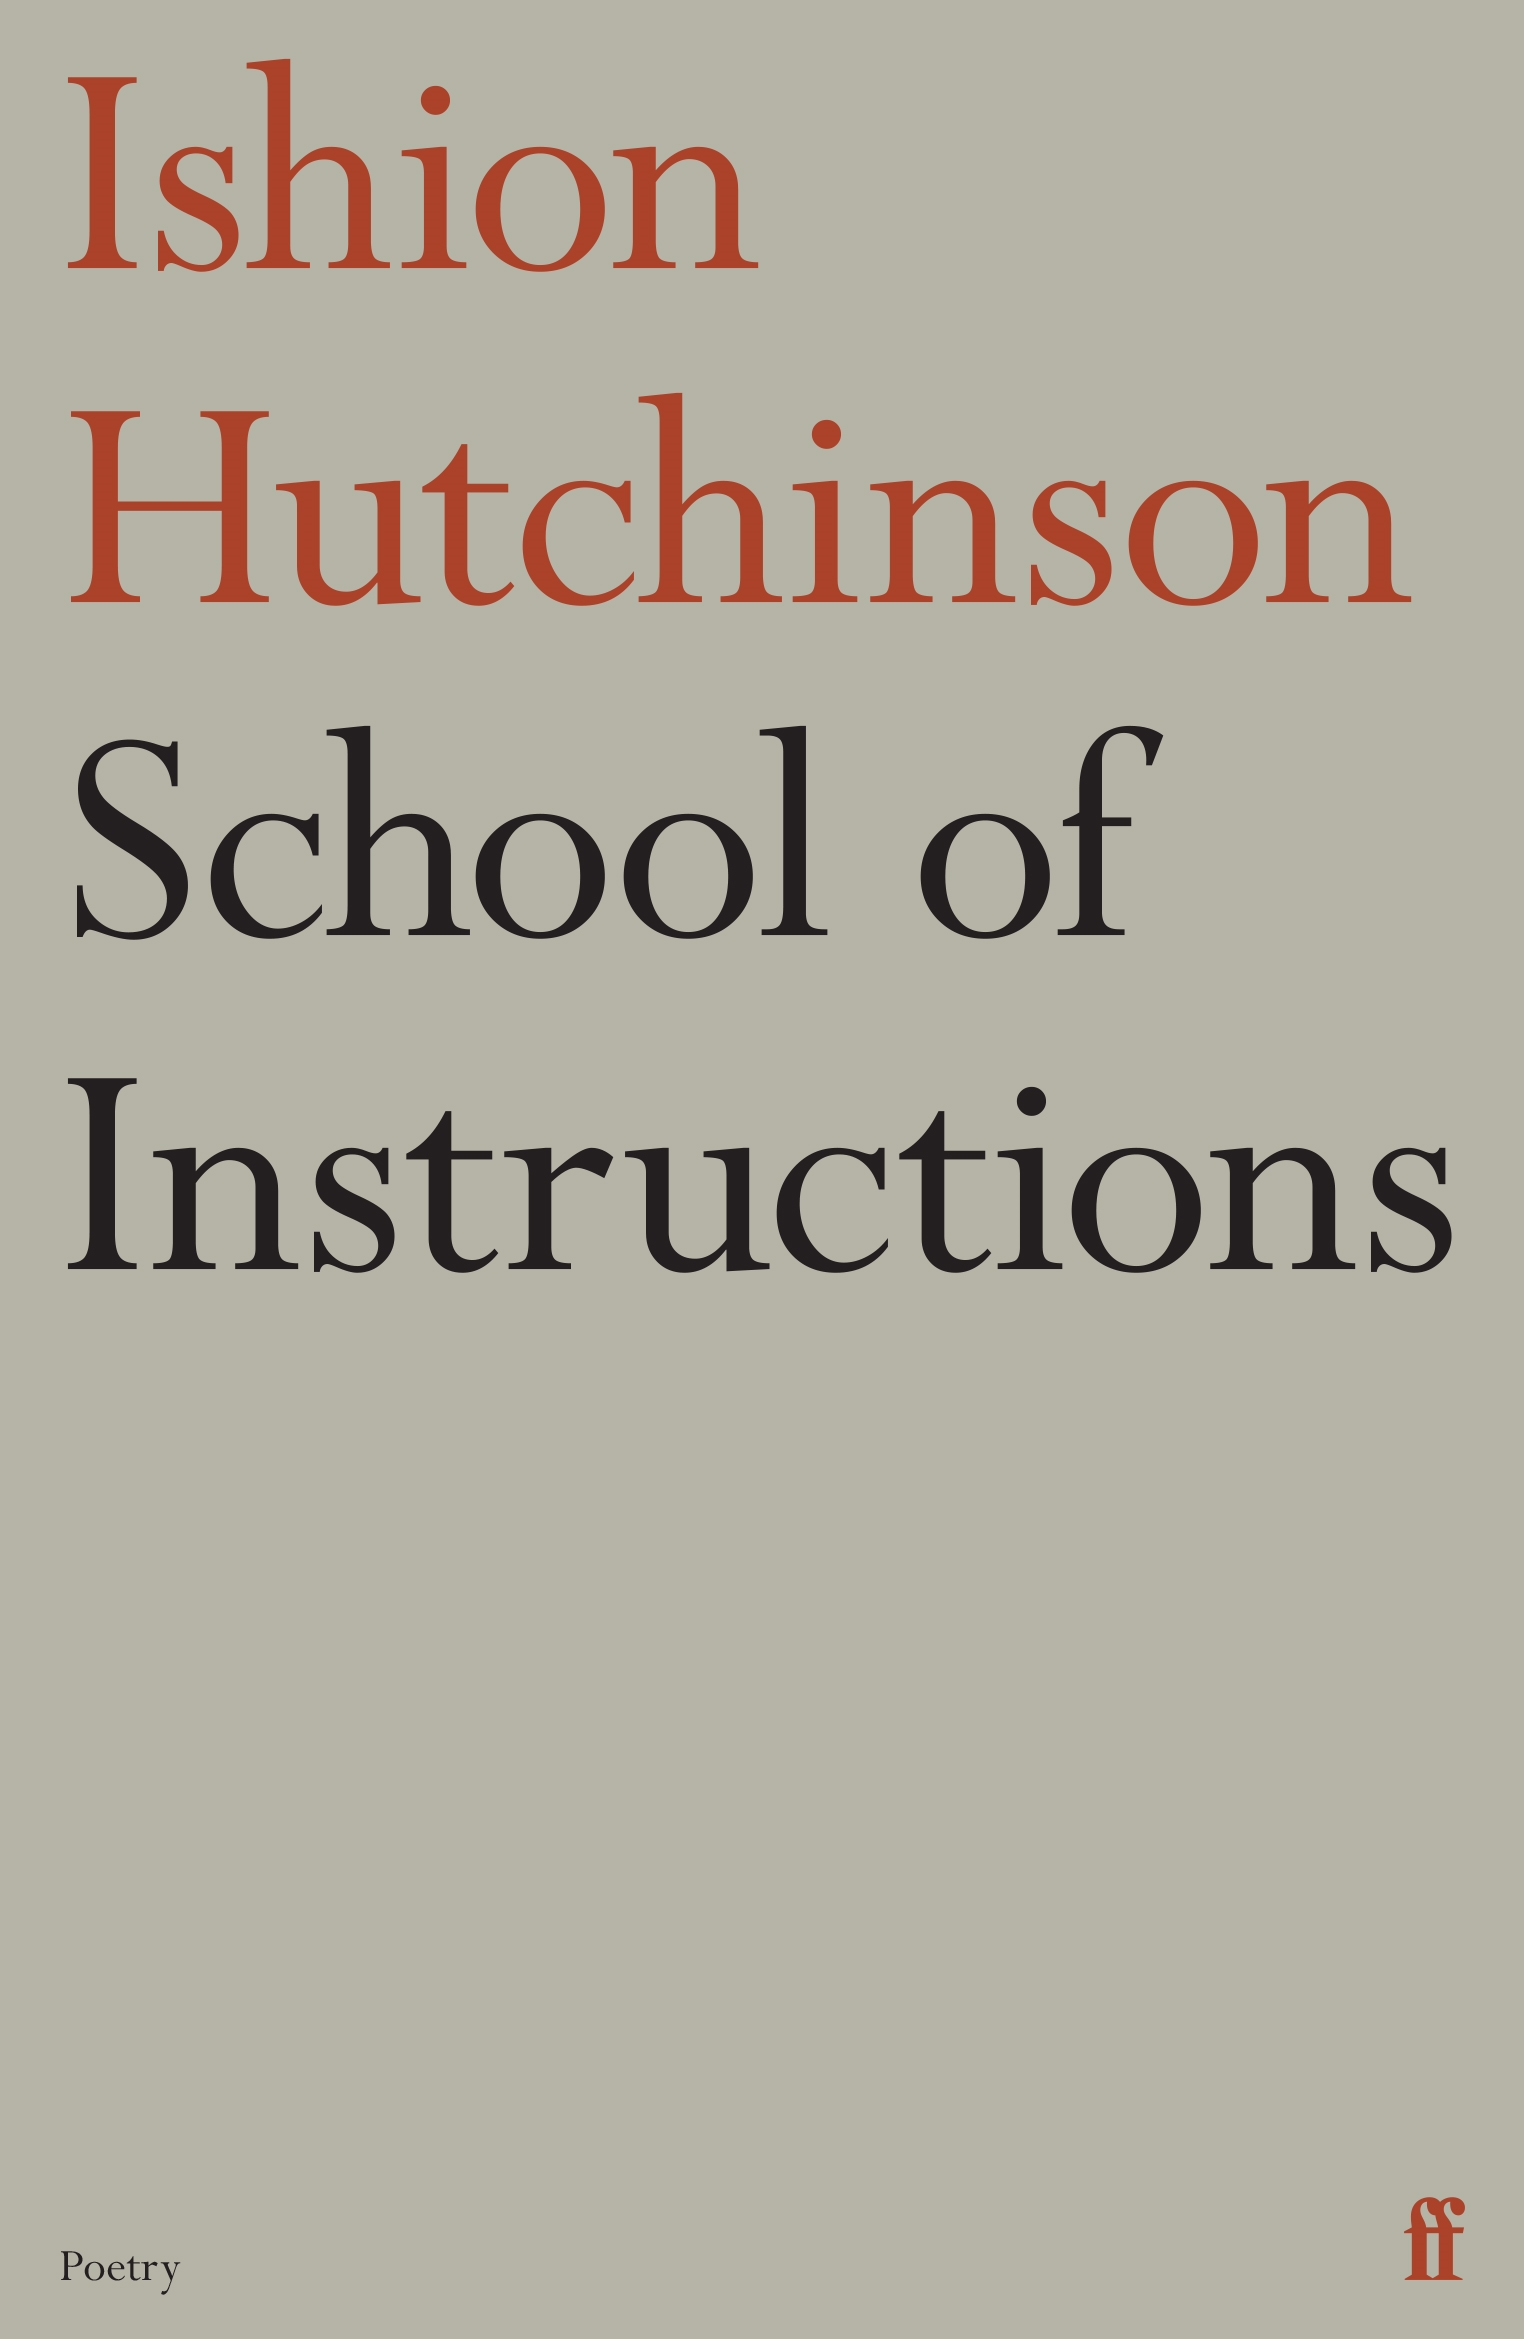 School of Instruction